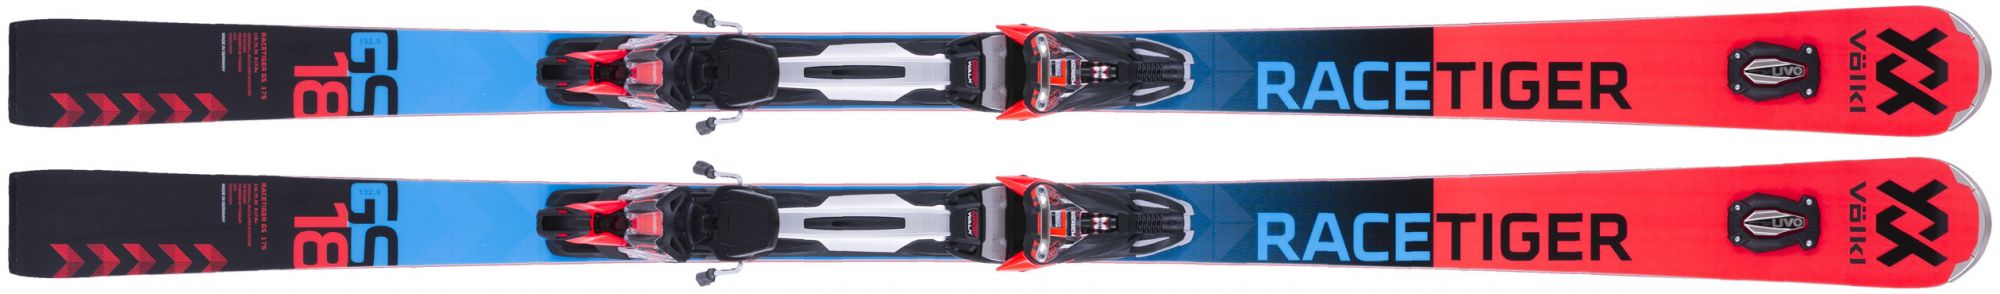 Sci volkl' Racetiger Speedwall GS Pro